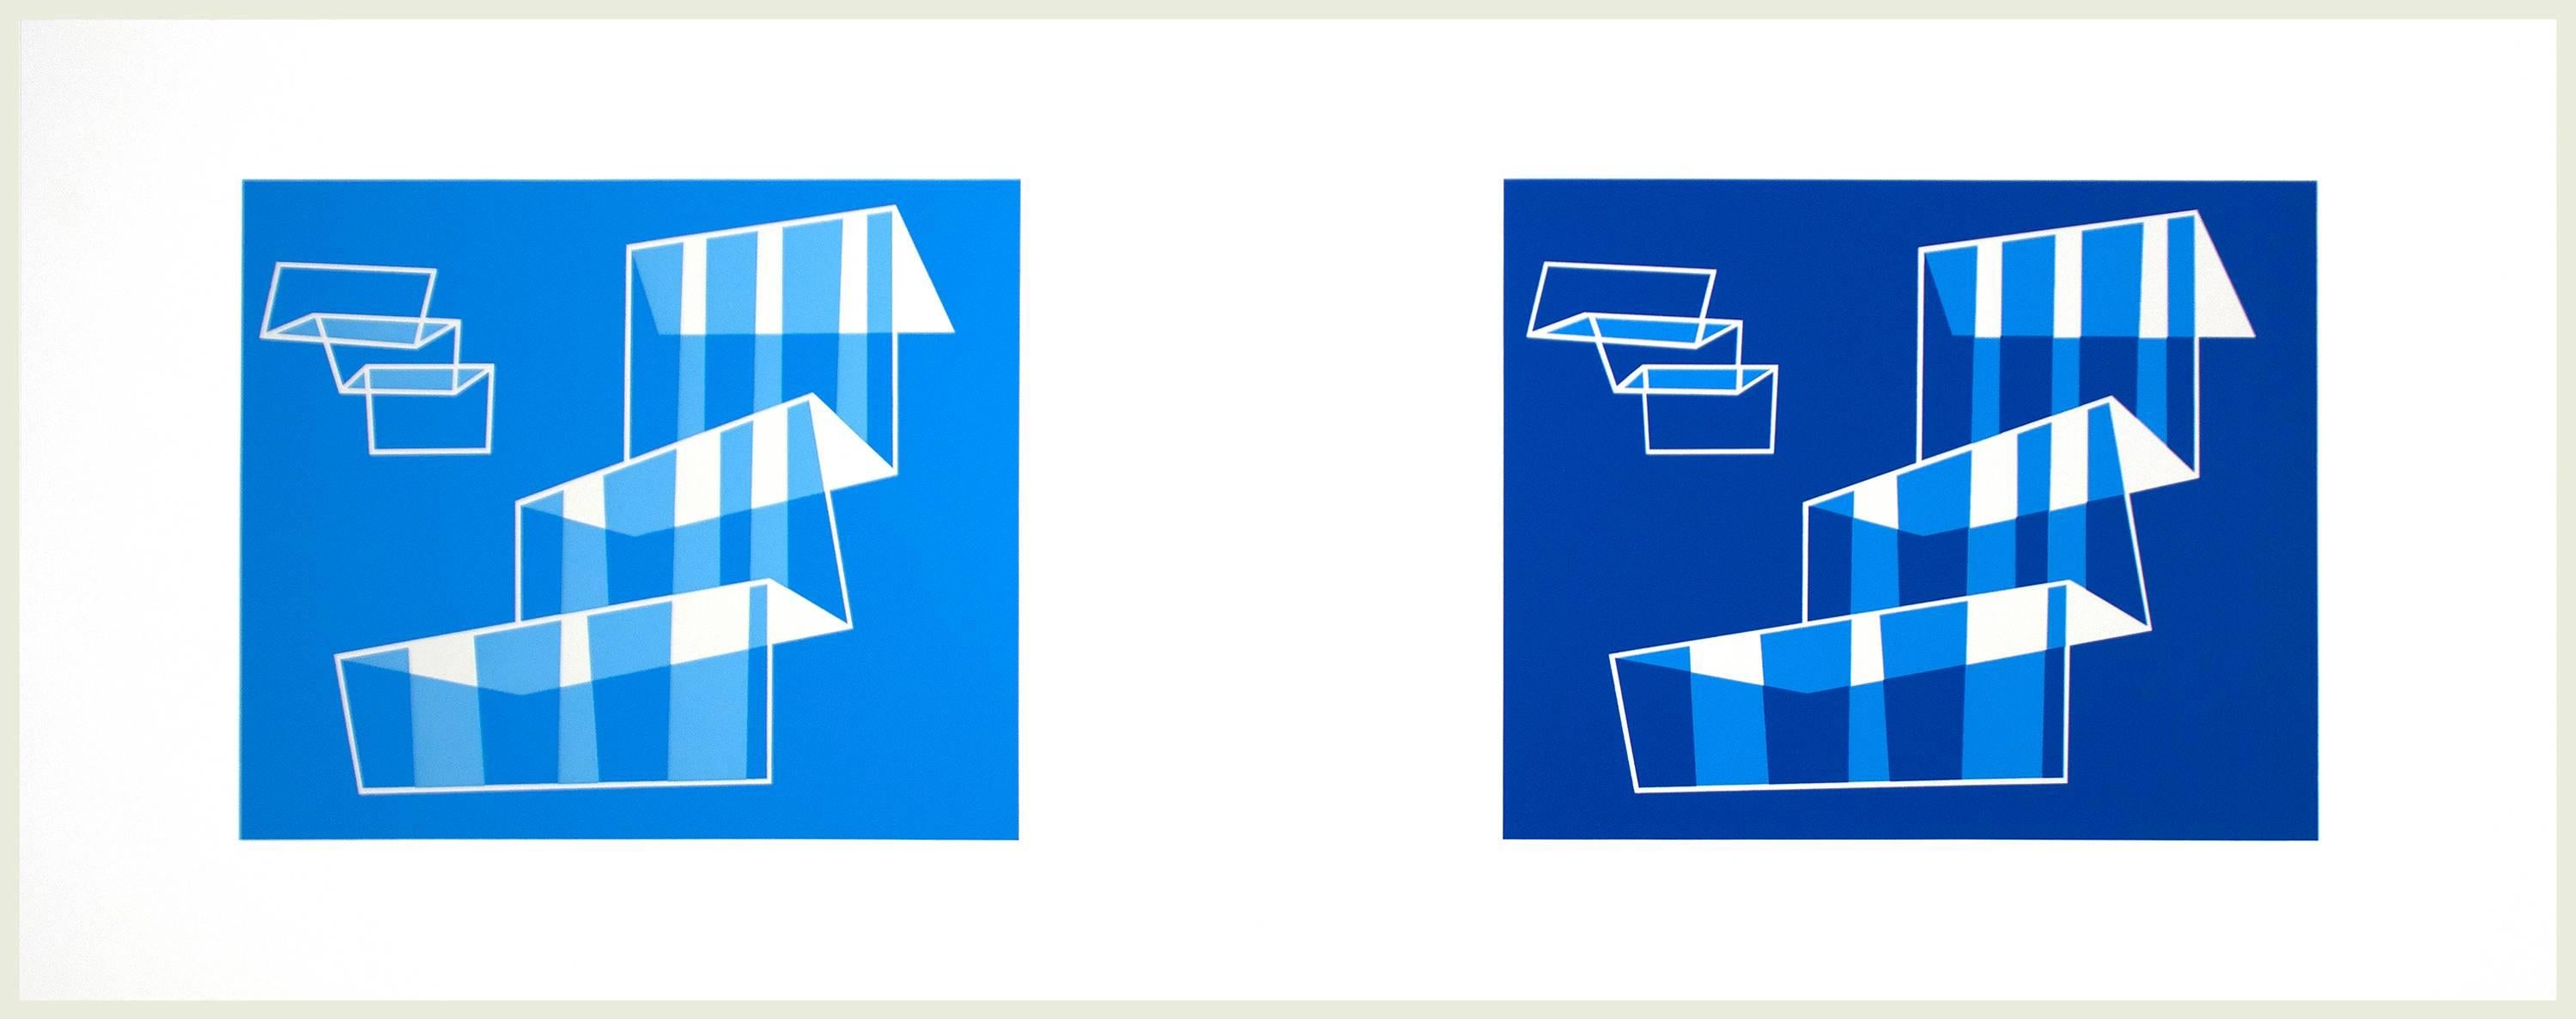 Josef Albers Abstract Print - Formulation: Articulation 1981.524.1.1